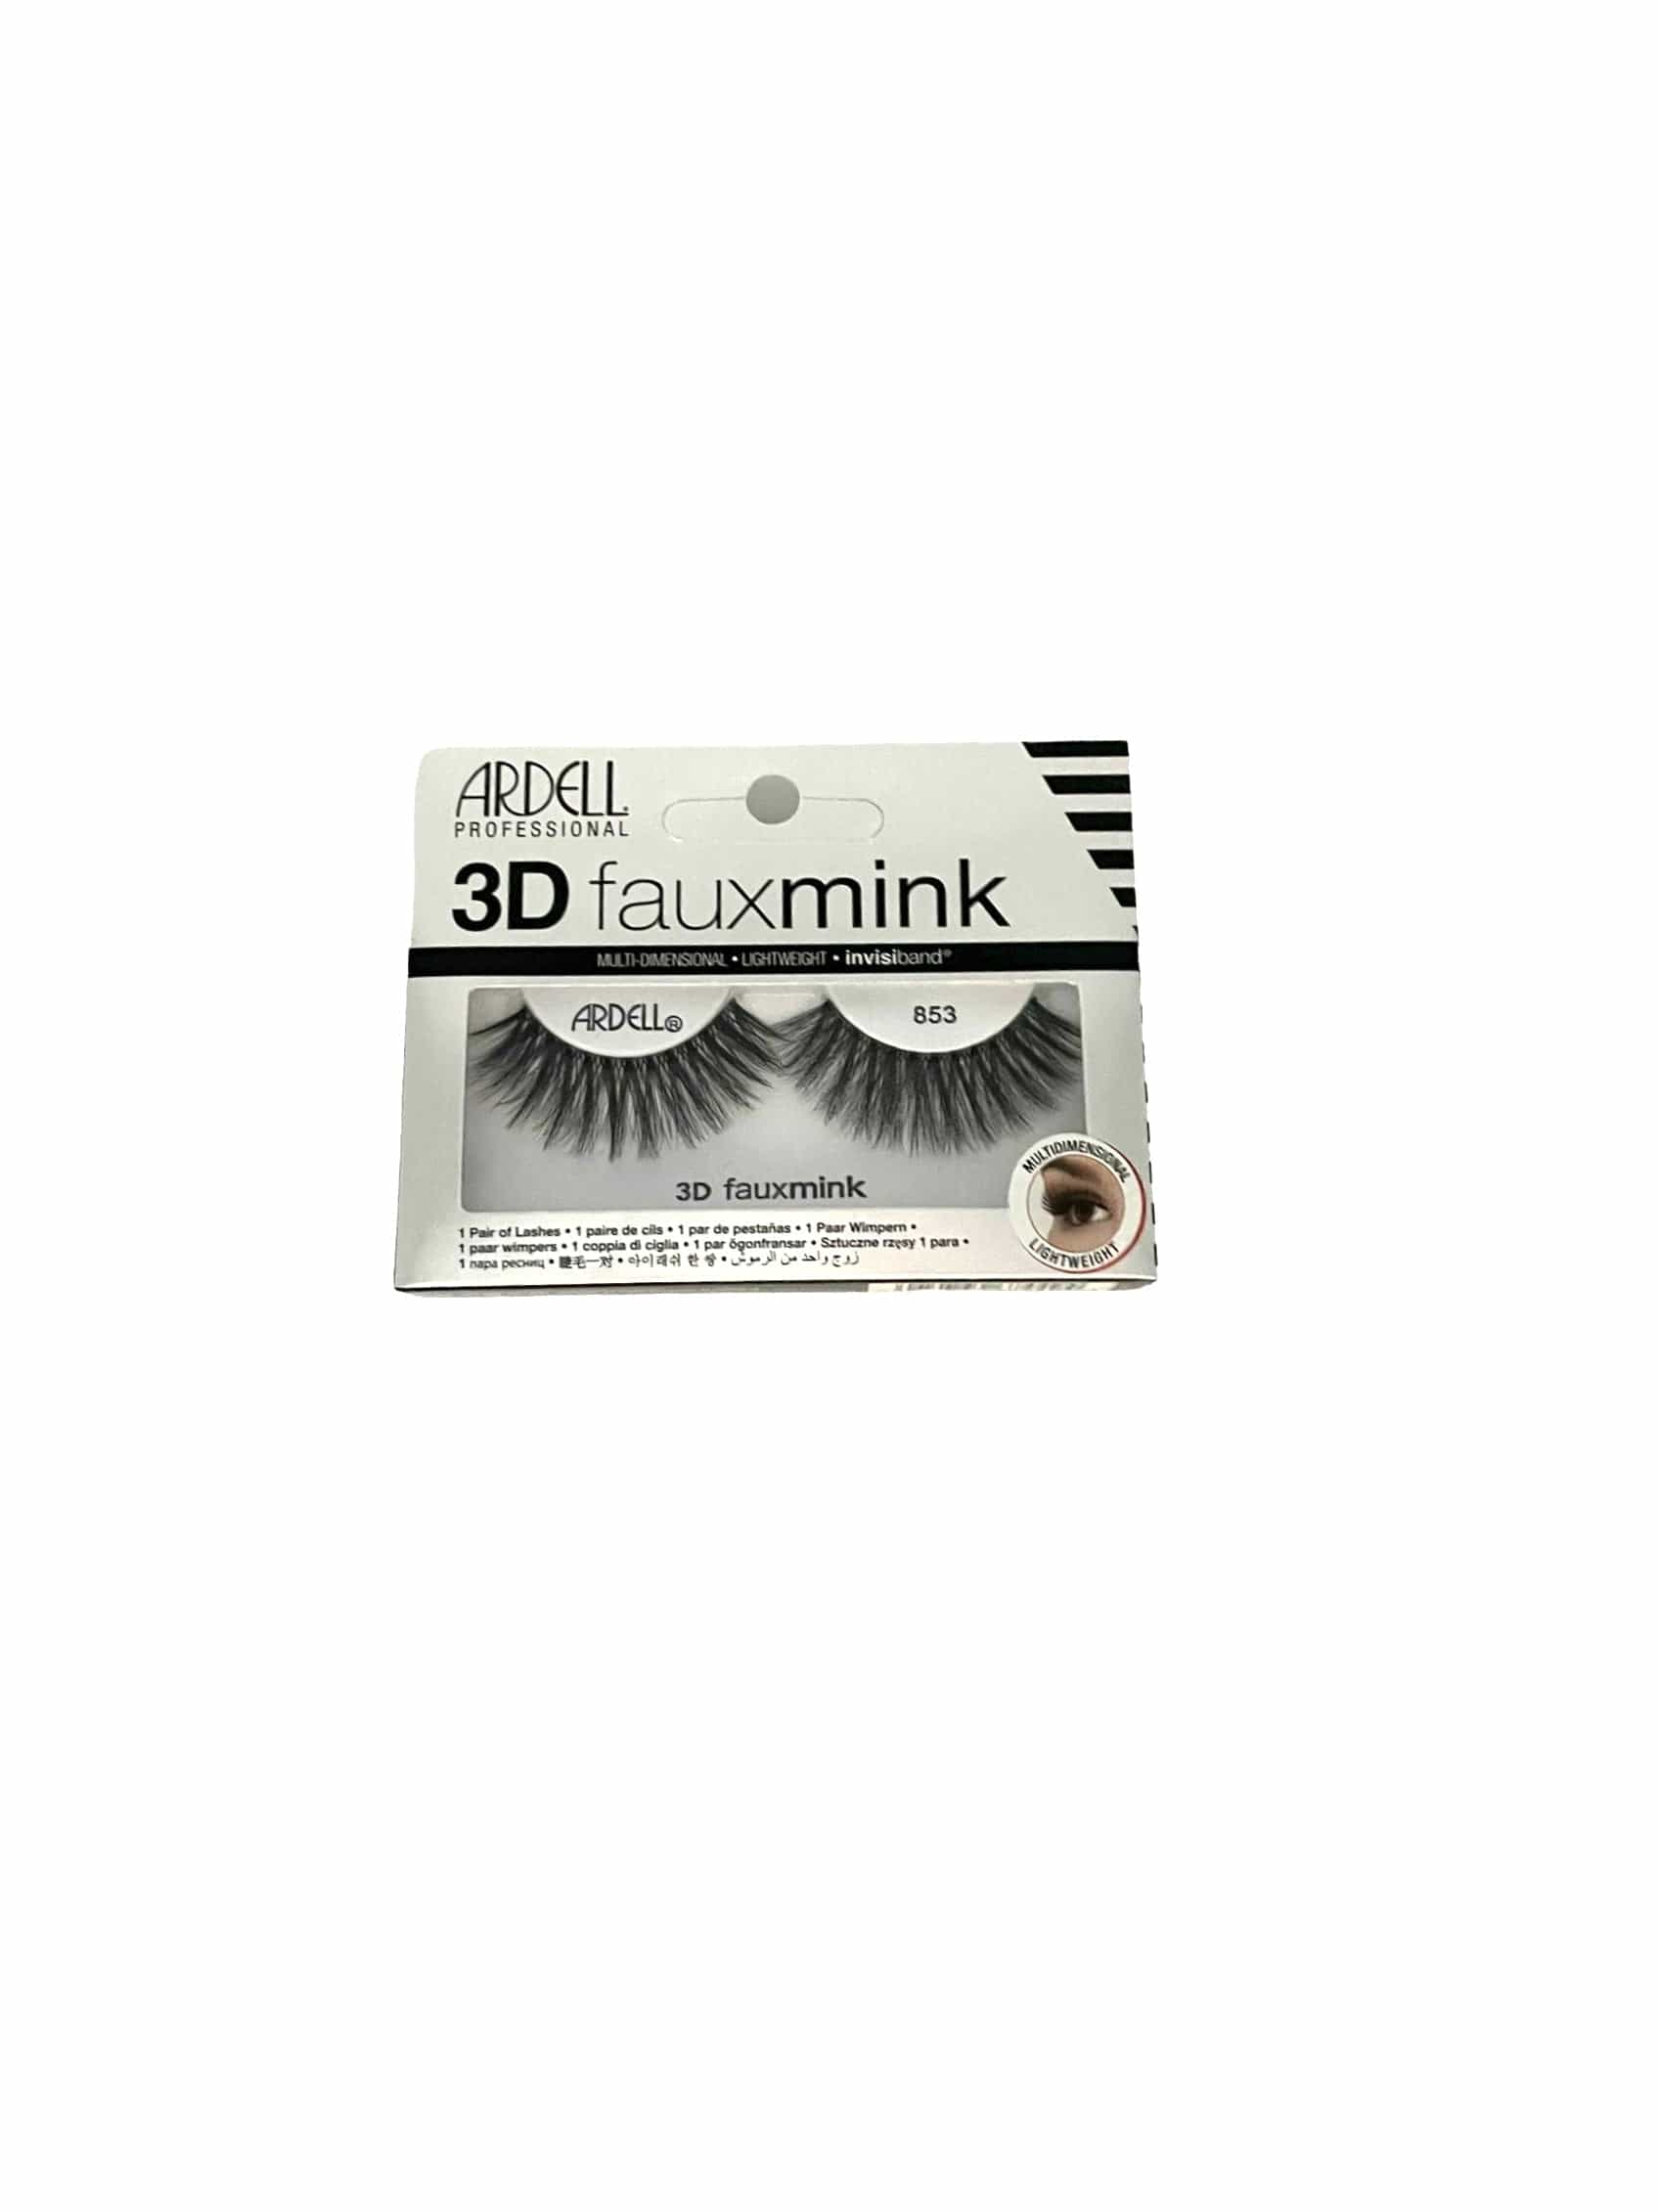 Ardell 3D Faux Mink Lash #853 False Eyelashes